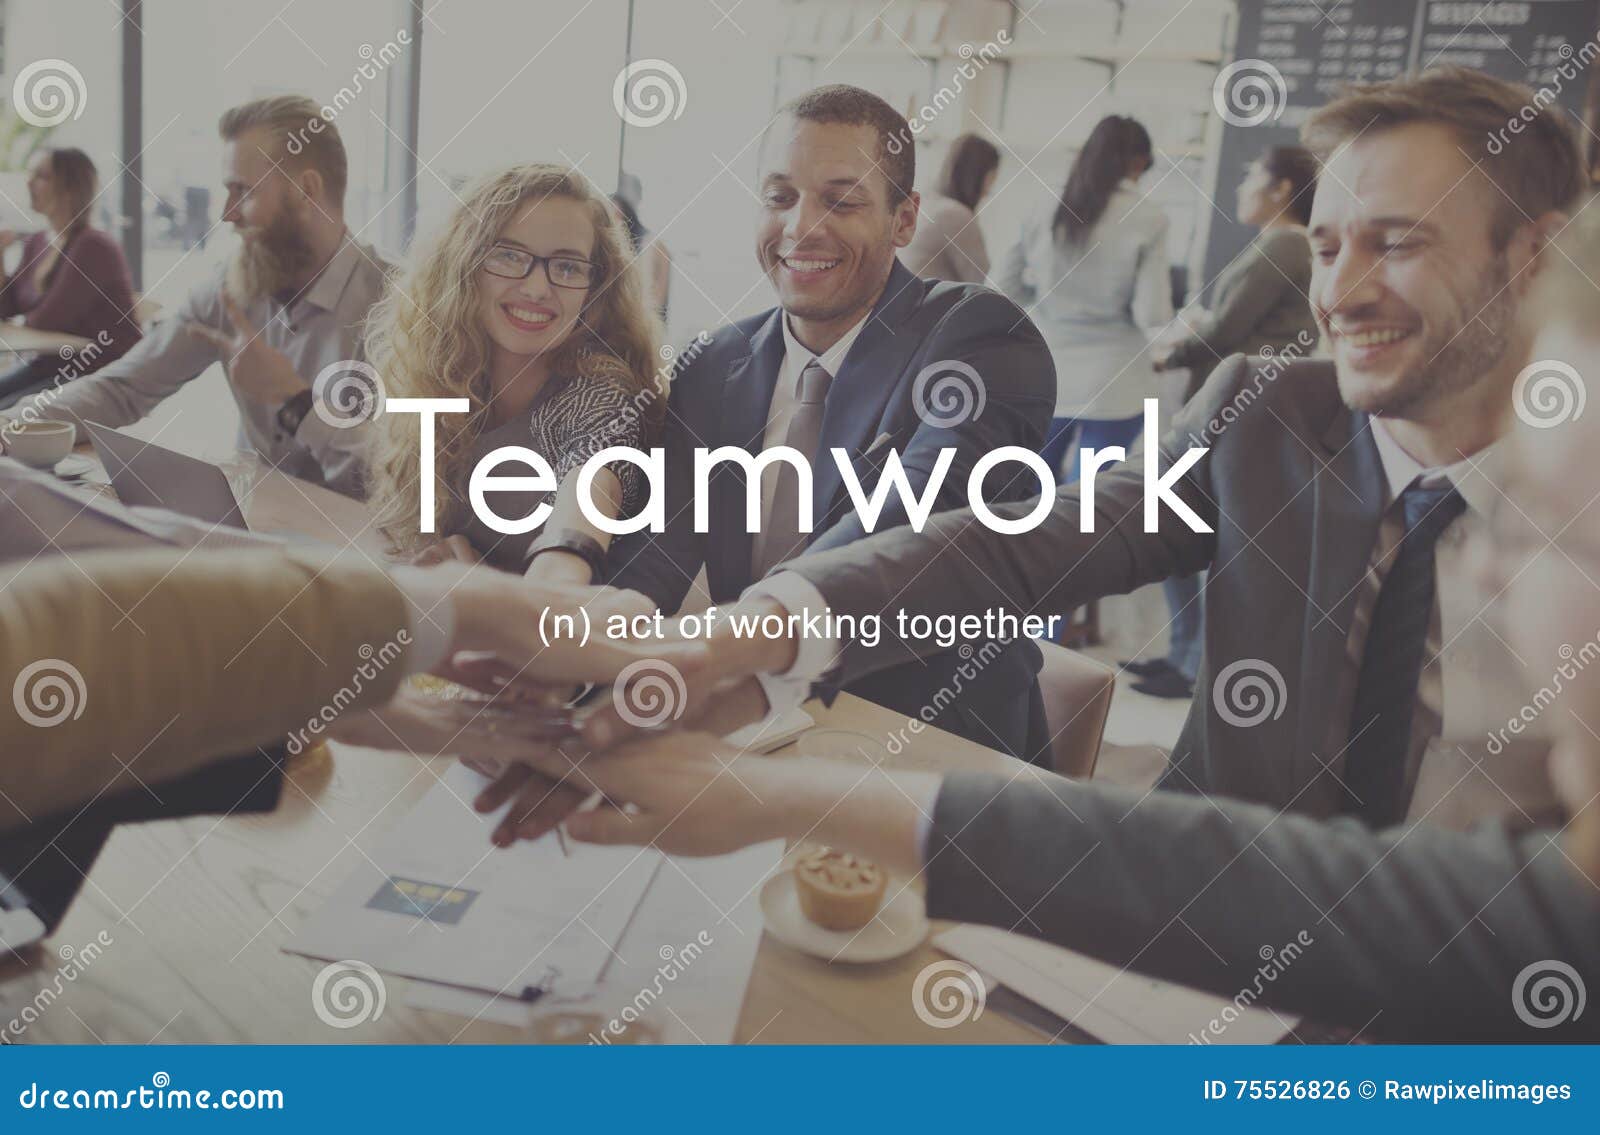 teamwork alliance collaboration company team concept